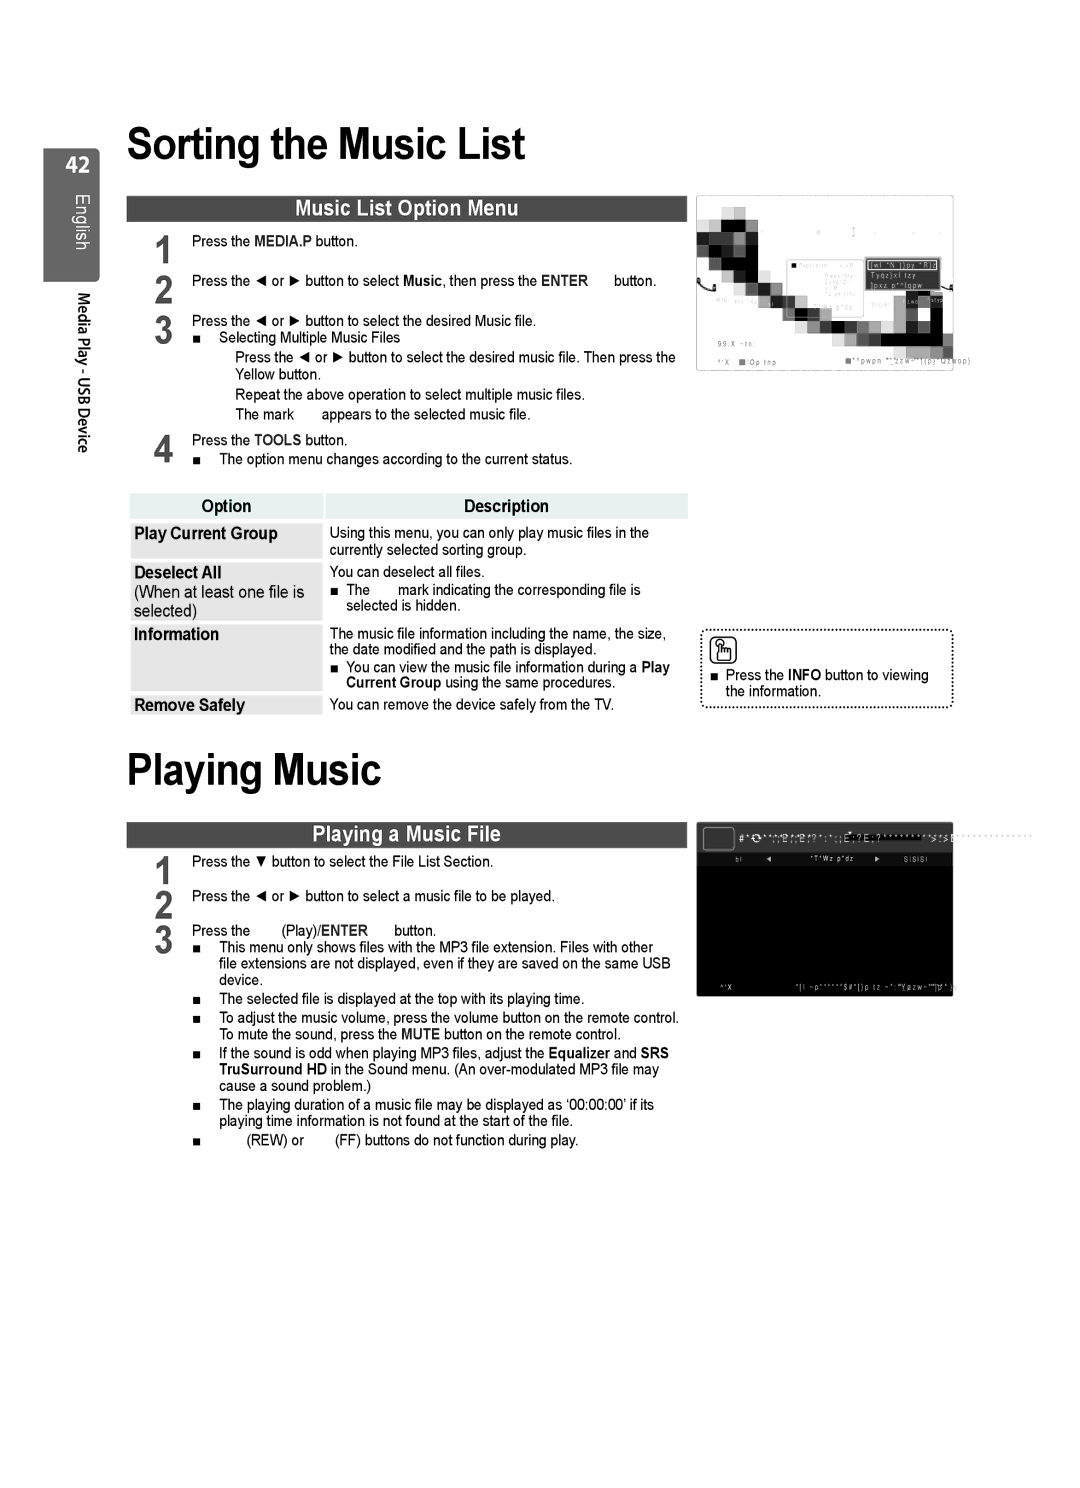 Samsung UE37B6000VWXXC, UE37B6000VWXXH Sorting the Music List, Playing Music, Music List Option Menu, Playing a Music File 